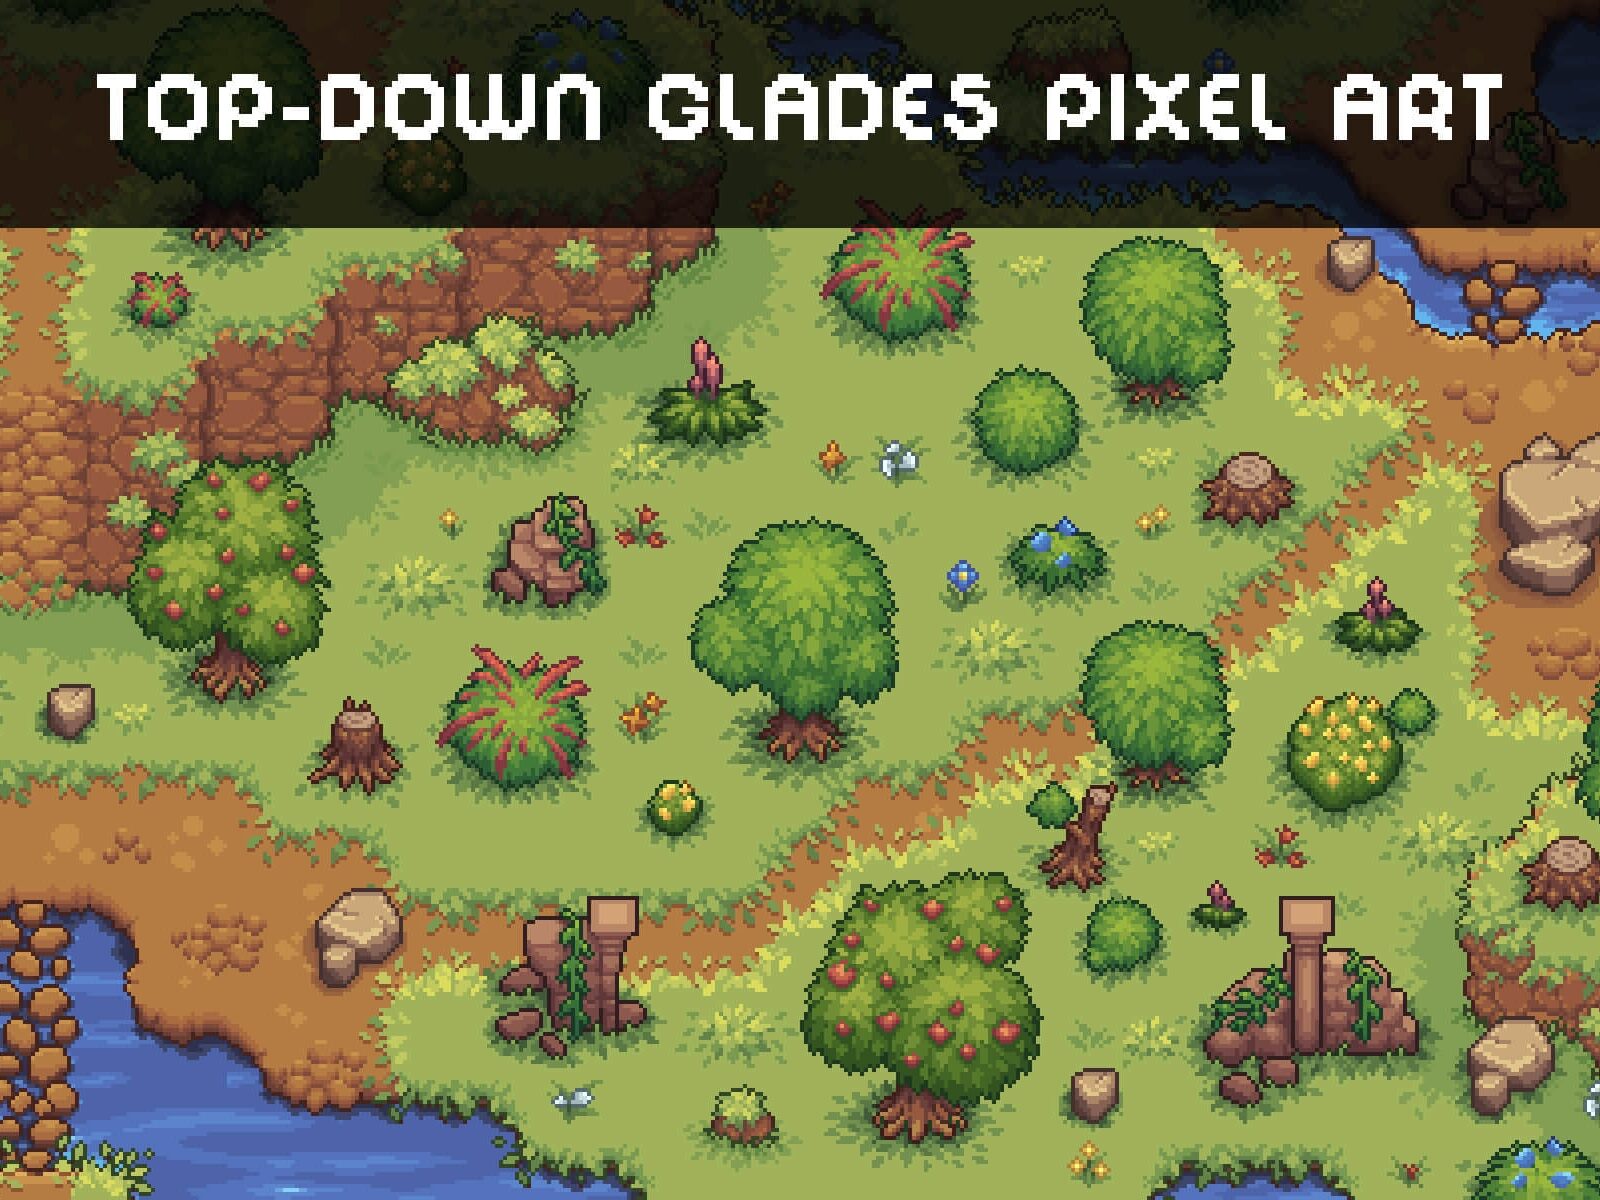 Grassland Top Down Tileset Pixel Art By 2D Game Assets On Dribbble